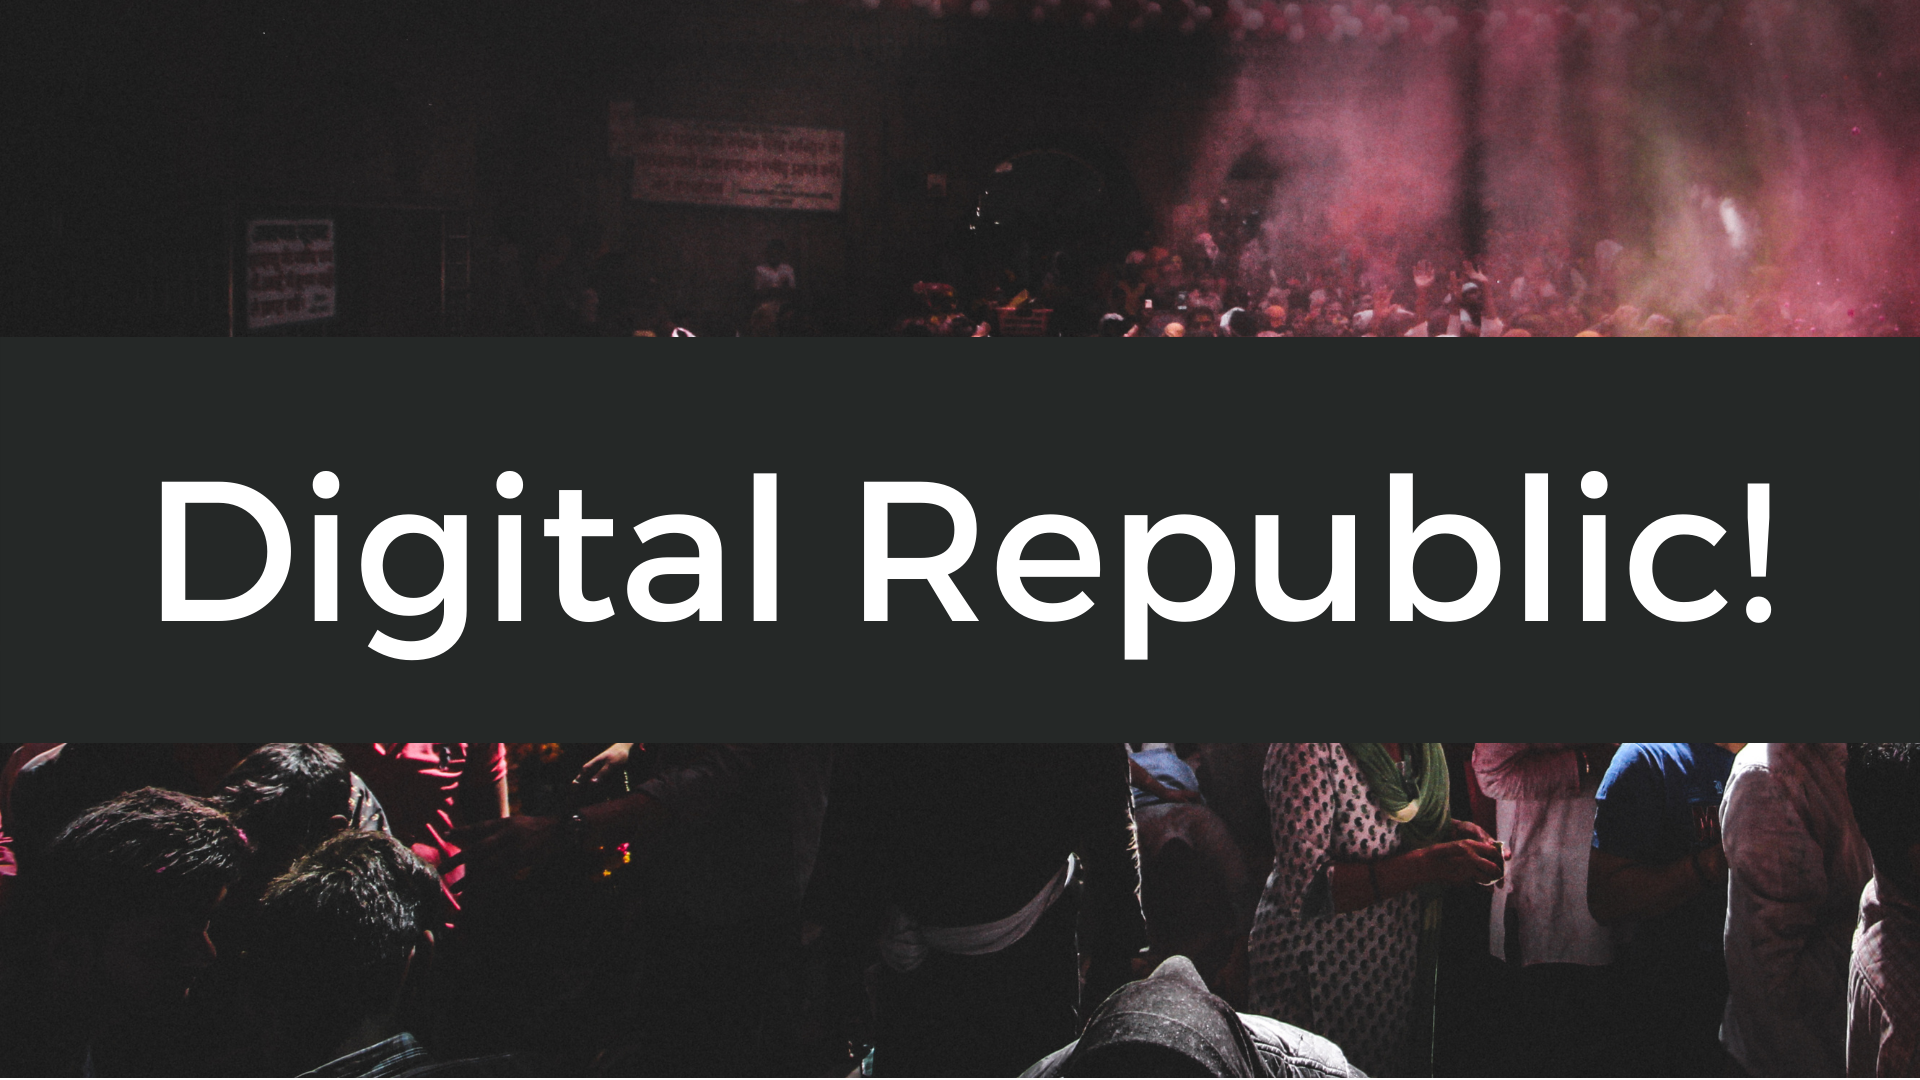 The Digital Republic!